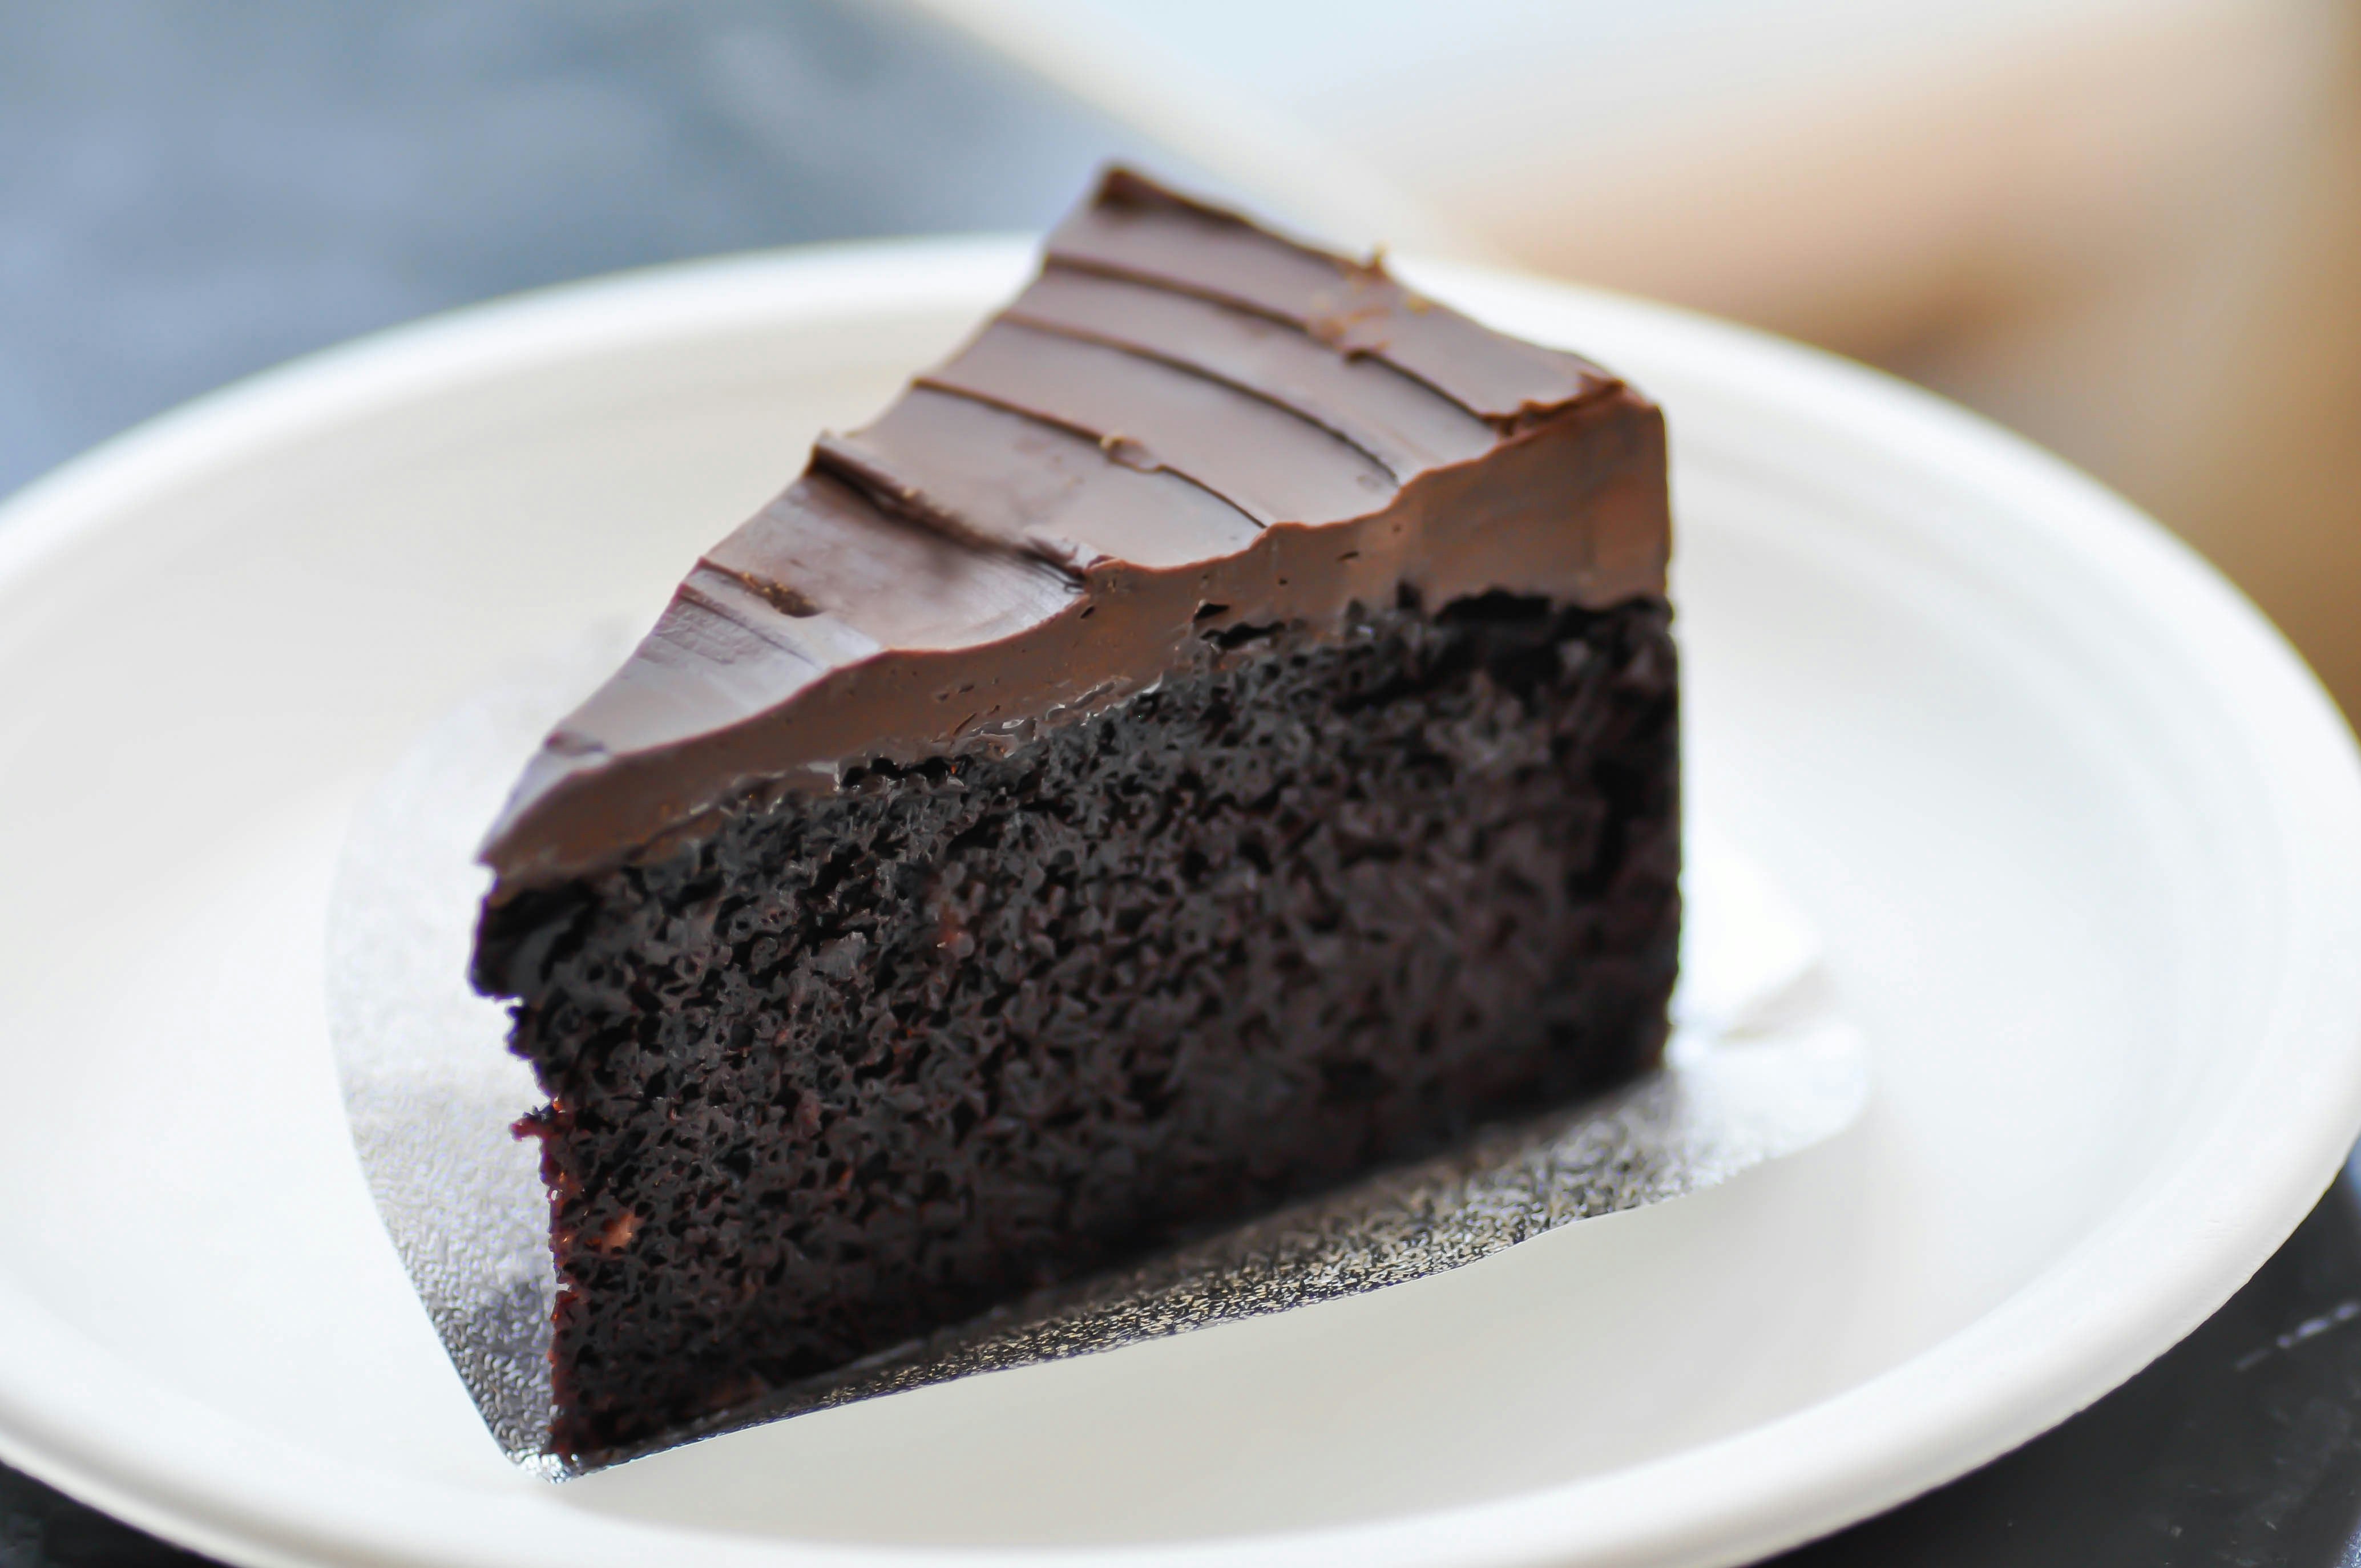 Chocolate cake for breakfast meme | Breakfast cake, Funny cake, Chocolate  cake